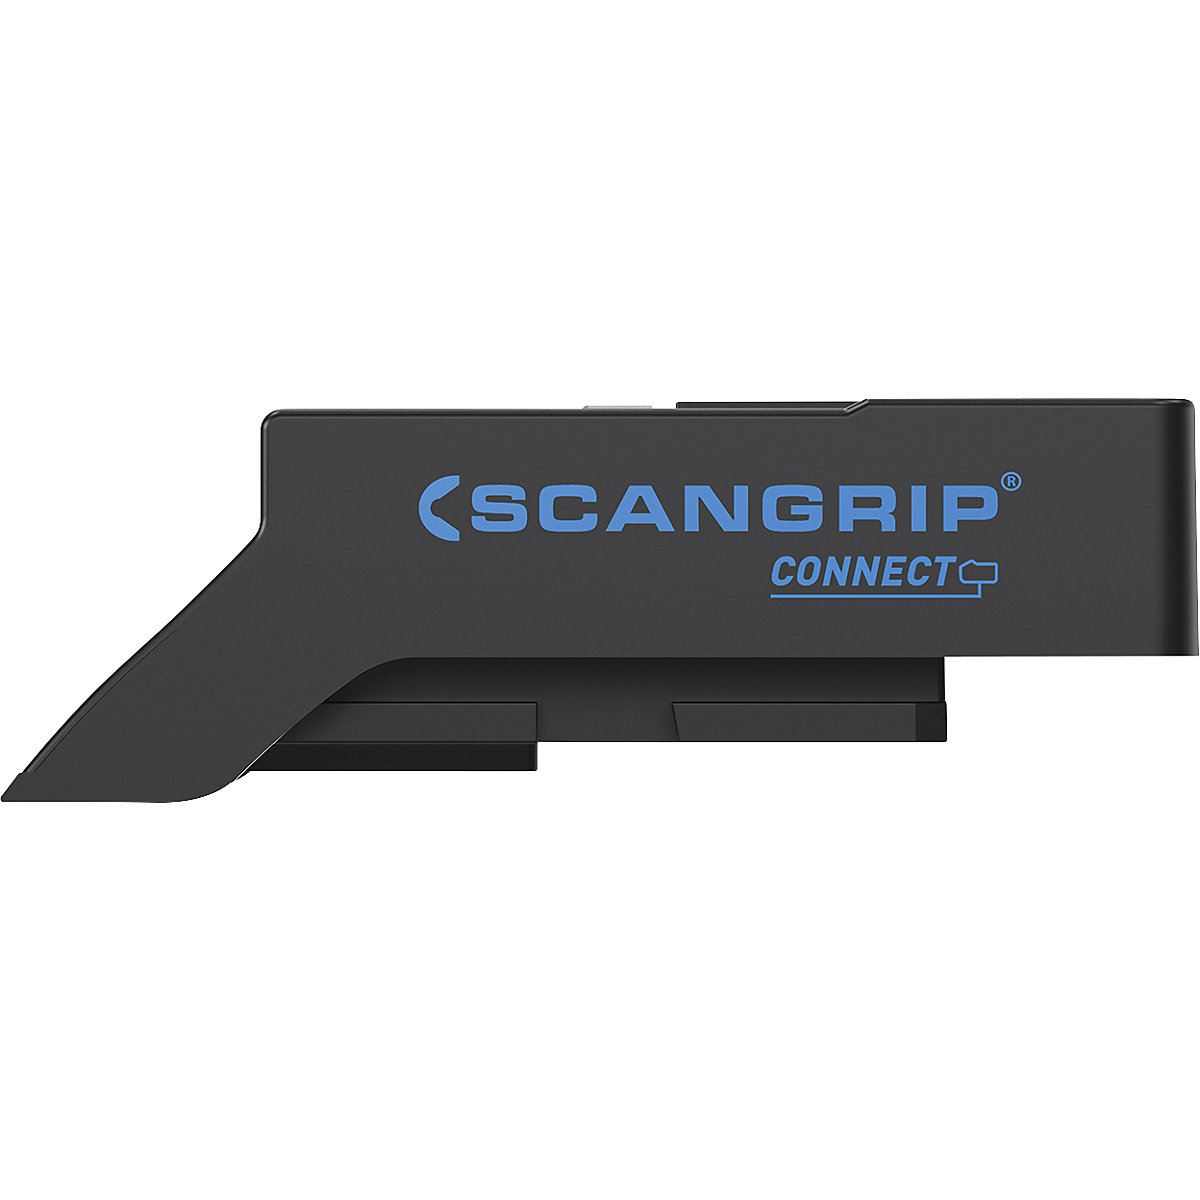 SCANGRIP SMART CONNECTOR – SCANGRIP (Imagine produs 2)-1